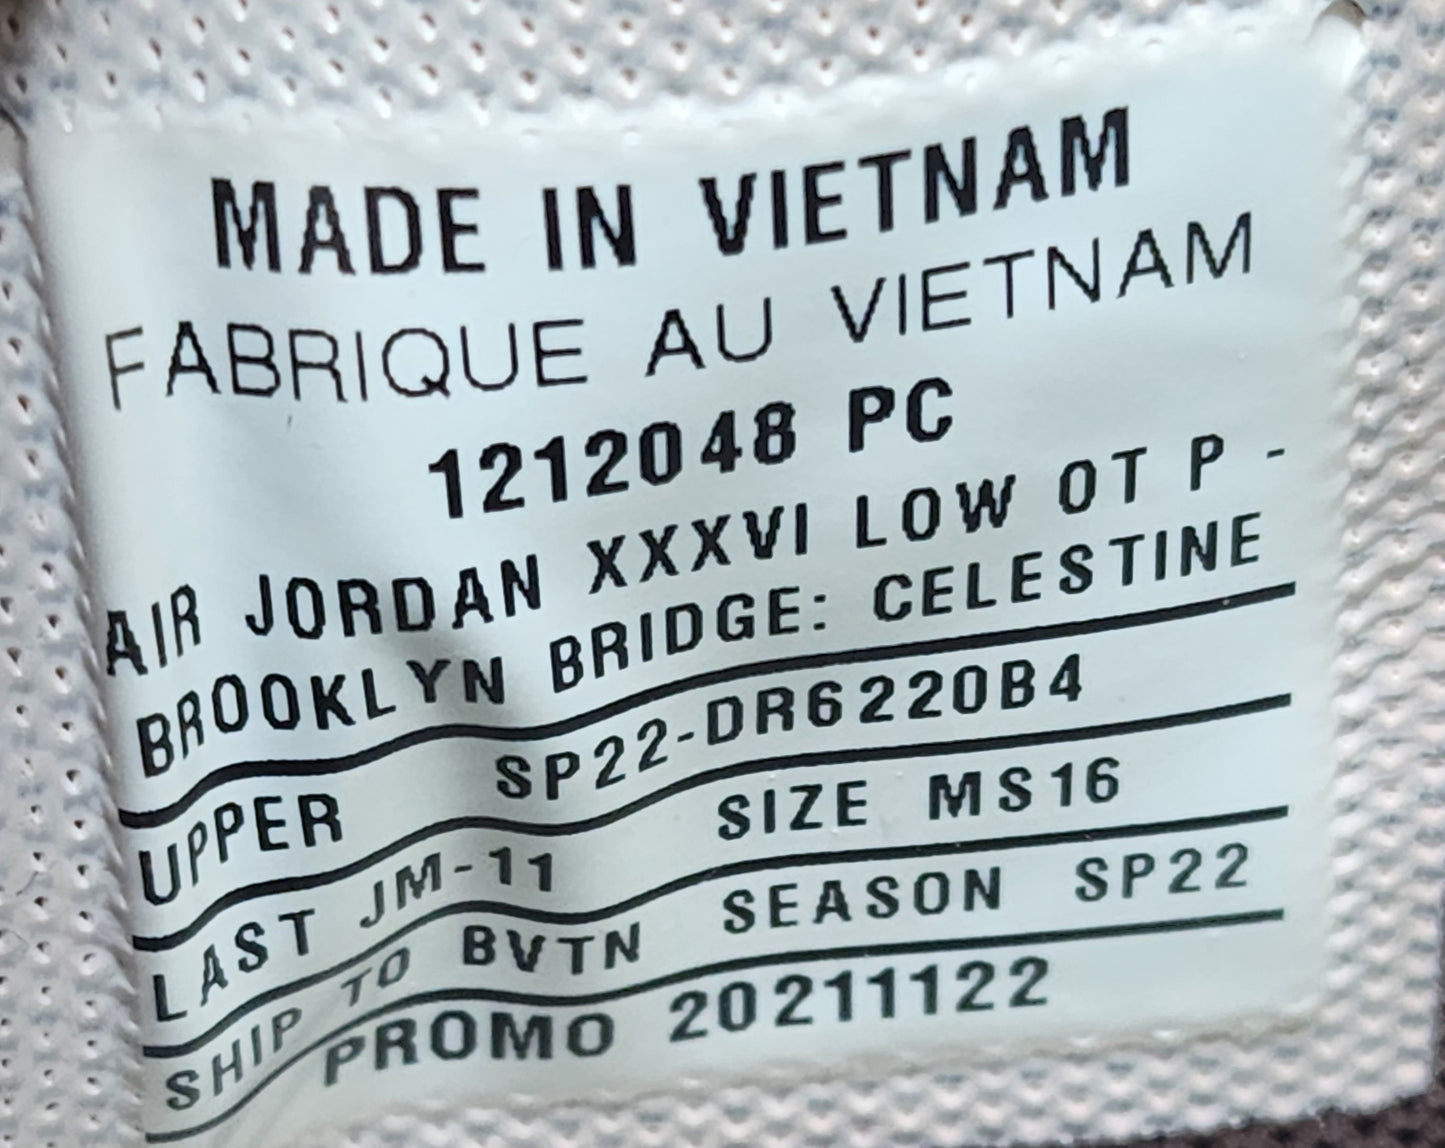 Air Jordan 36 Low - Obi Toppin Knicks PE